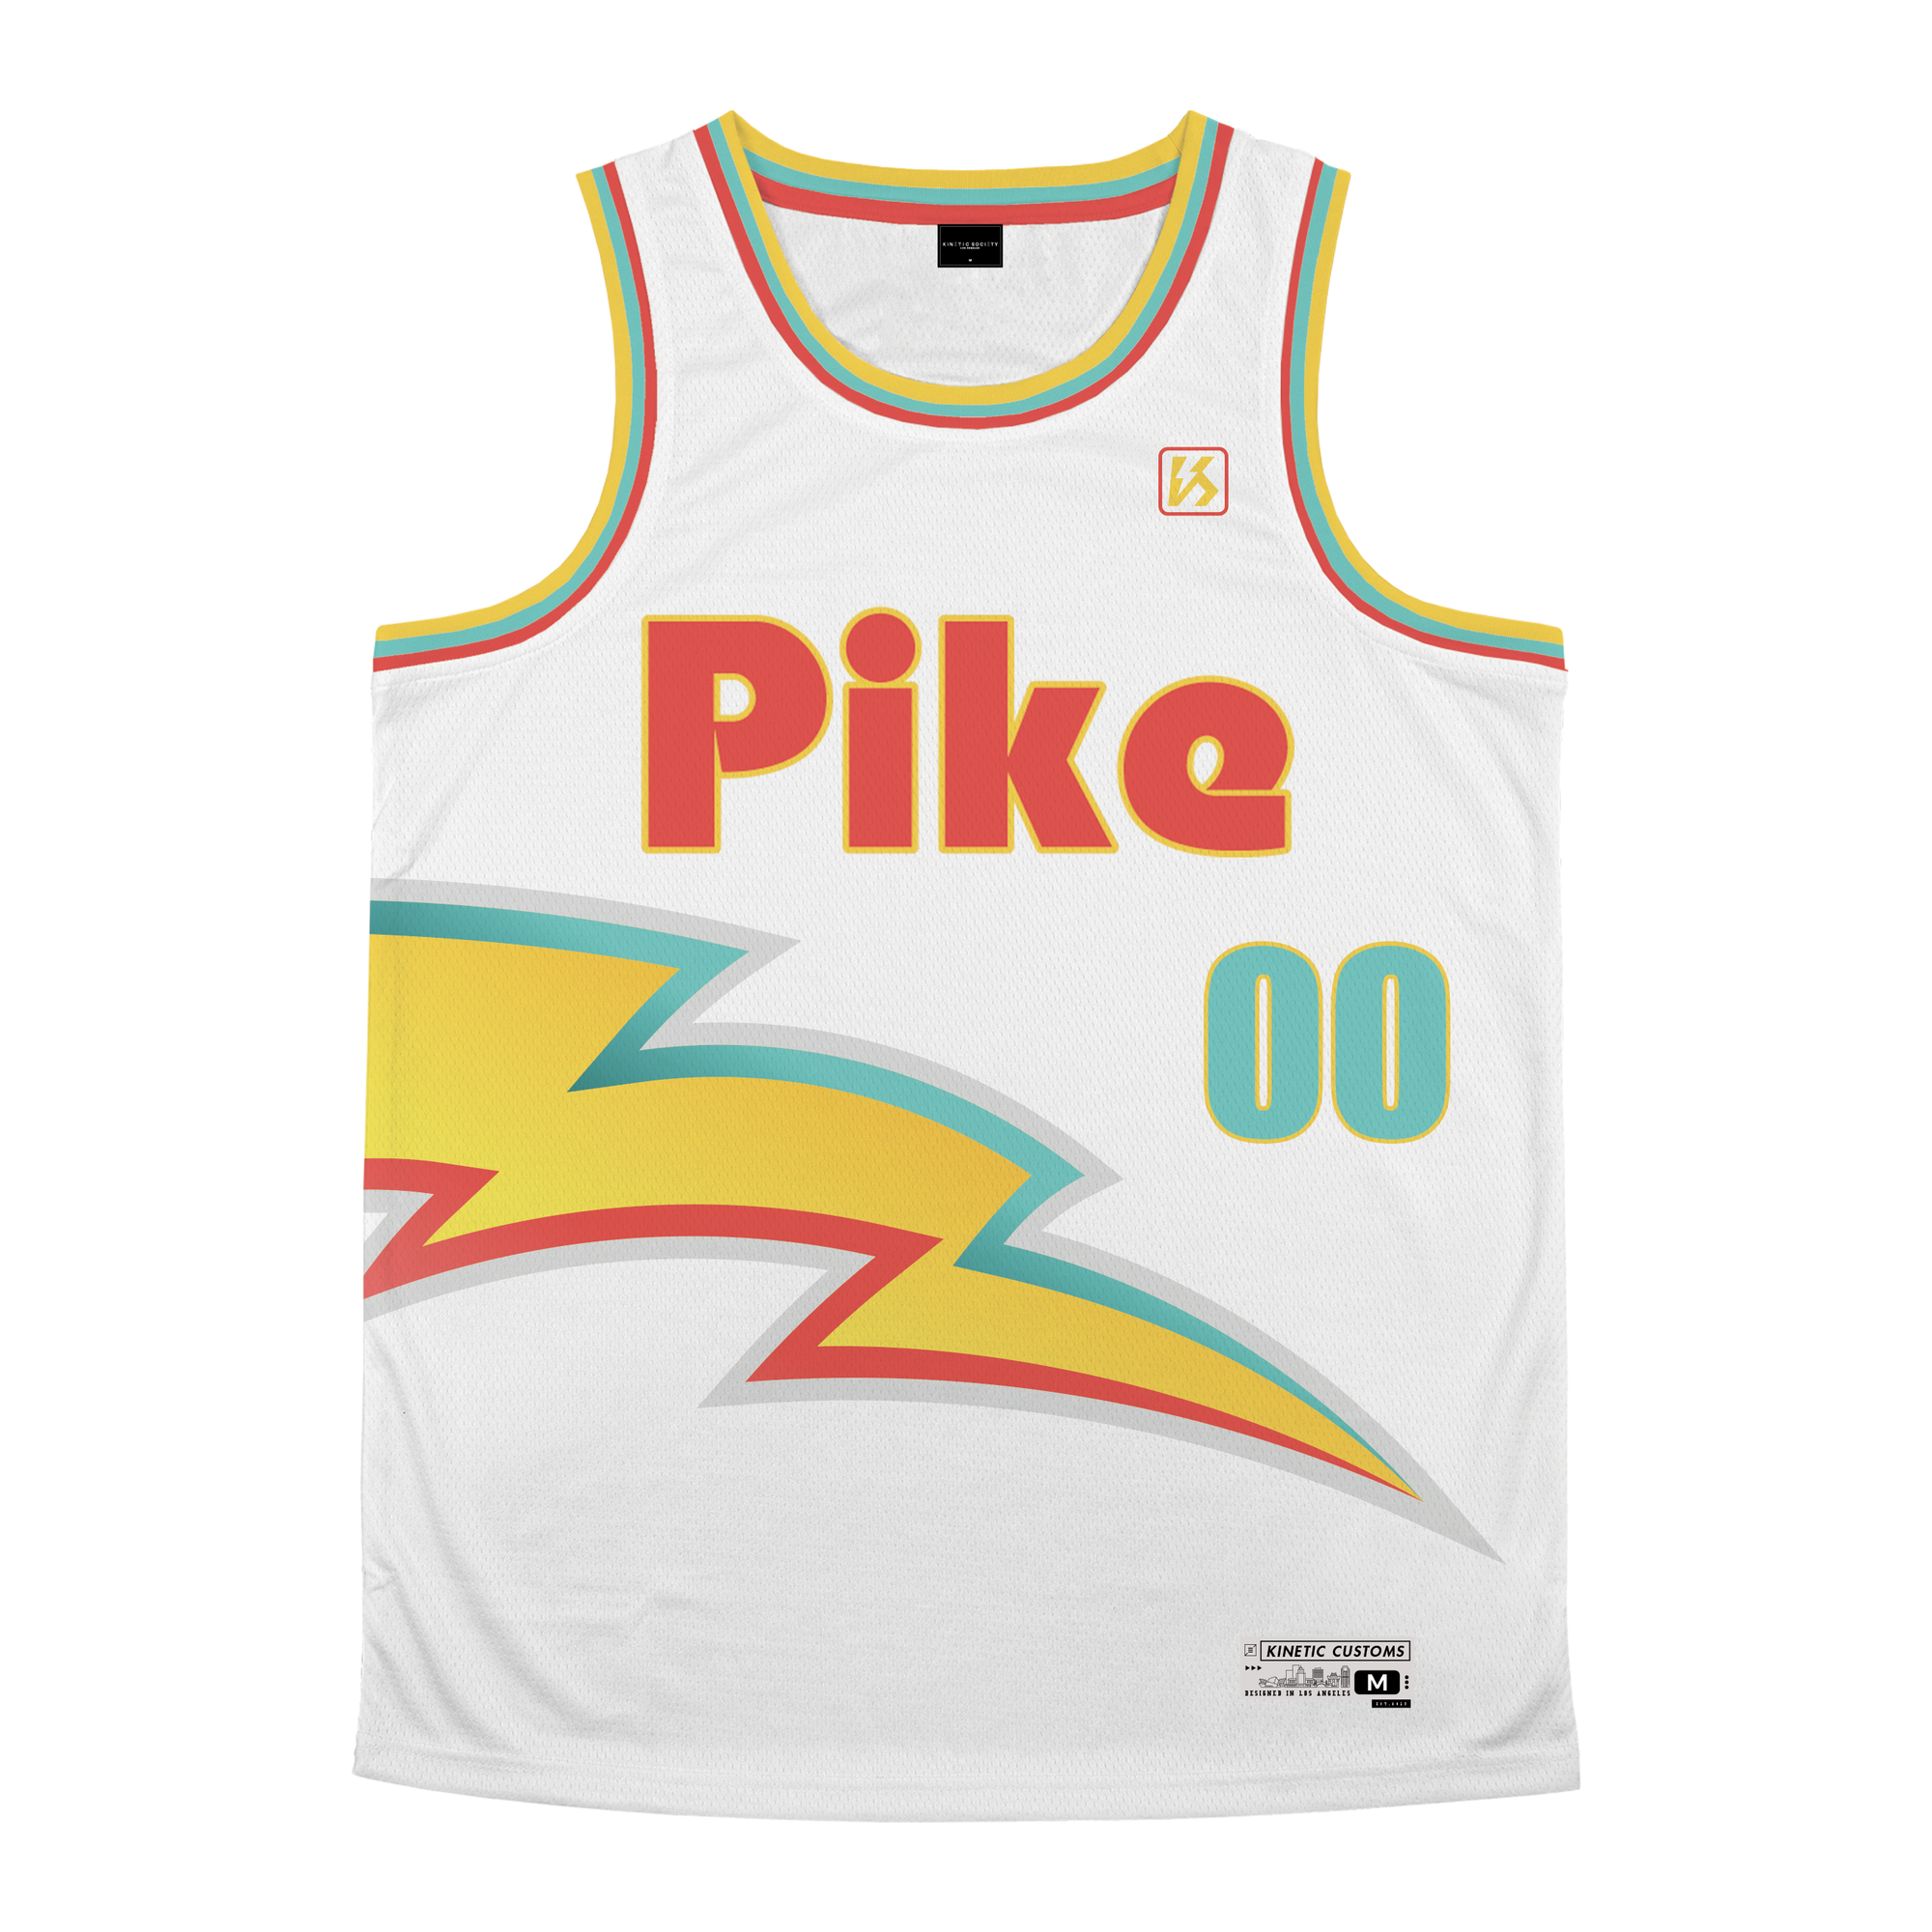 Pi Kappa Alpha - Bolt Basketball Jersey